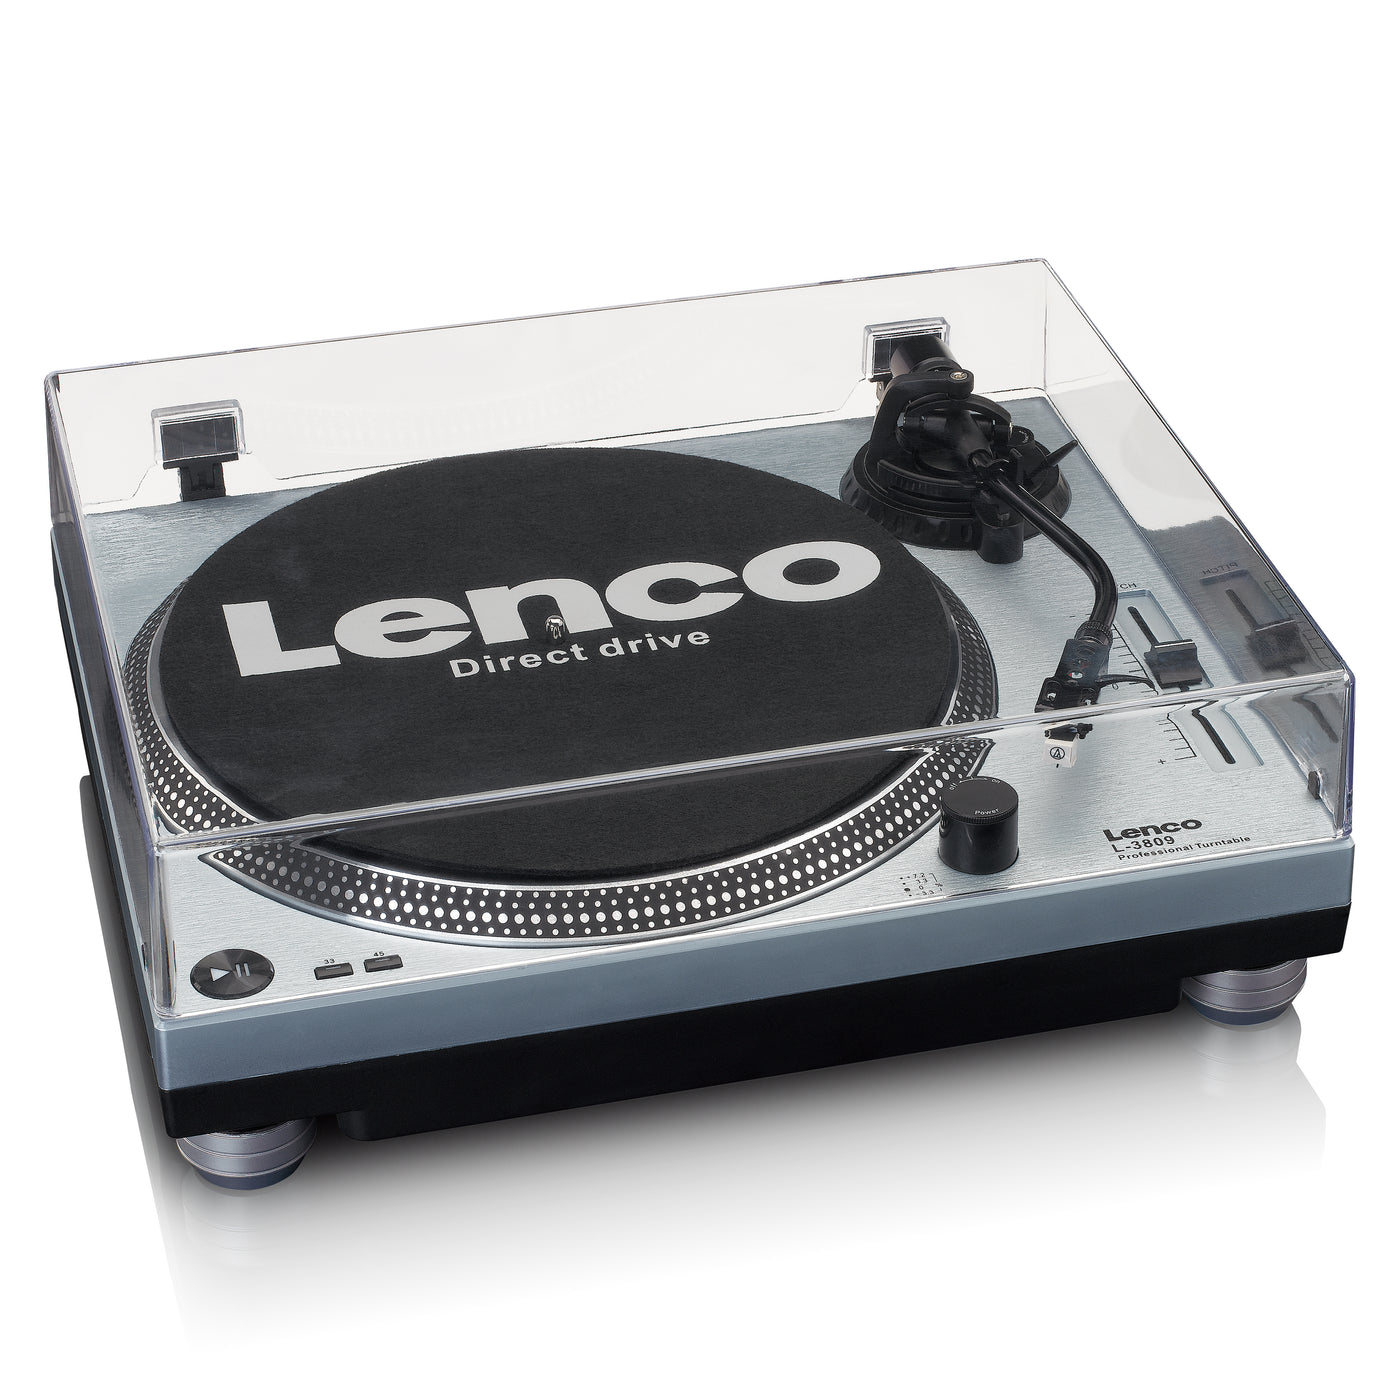 LENCO L-3809ME - Direct drive Record Player with USB / PC Encoding - Metallic blue